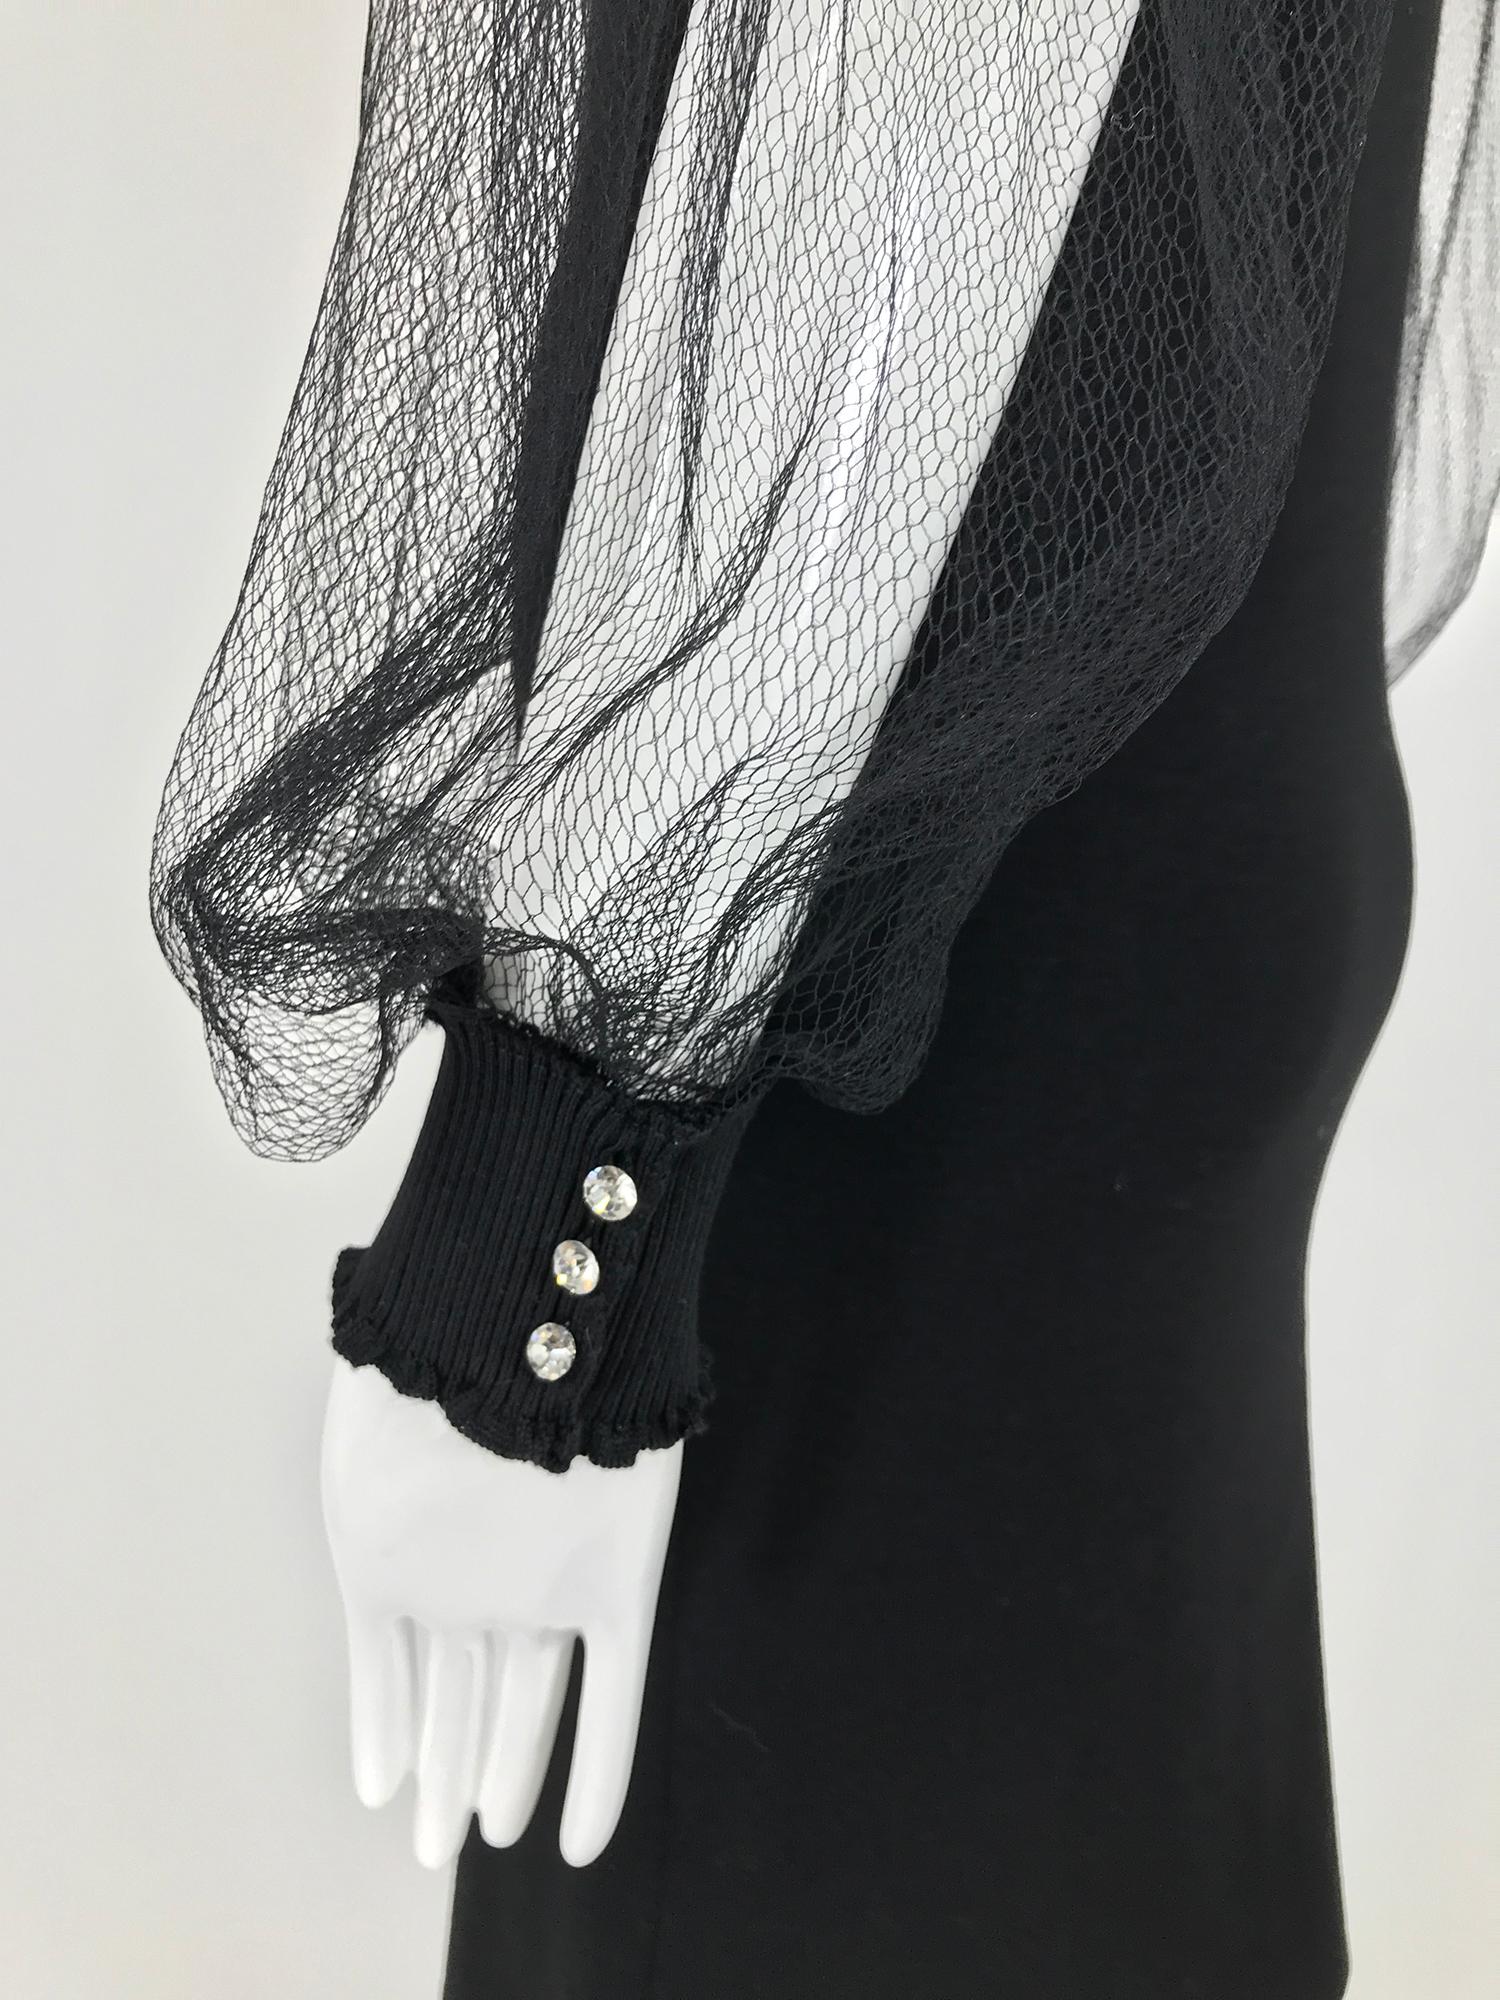 Loris Azzaro Black Wool/cashmere Sheath Dress with Net Sleeves 4